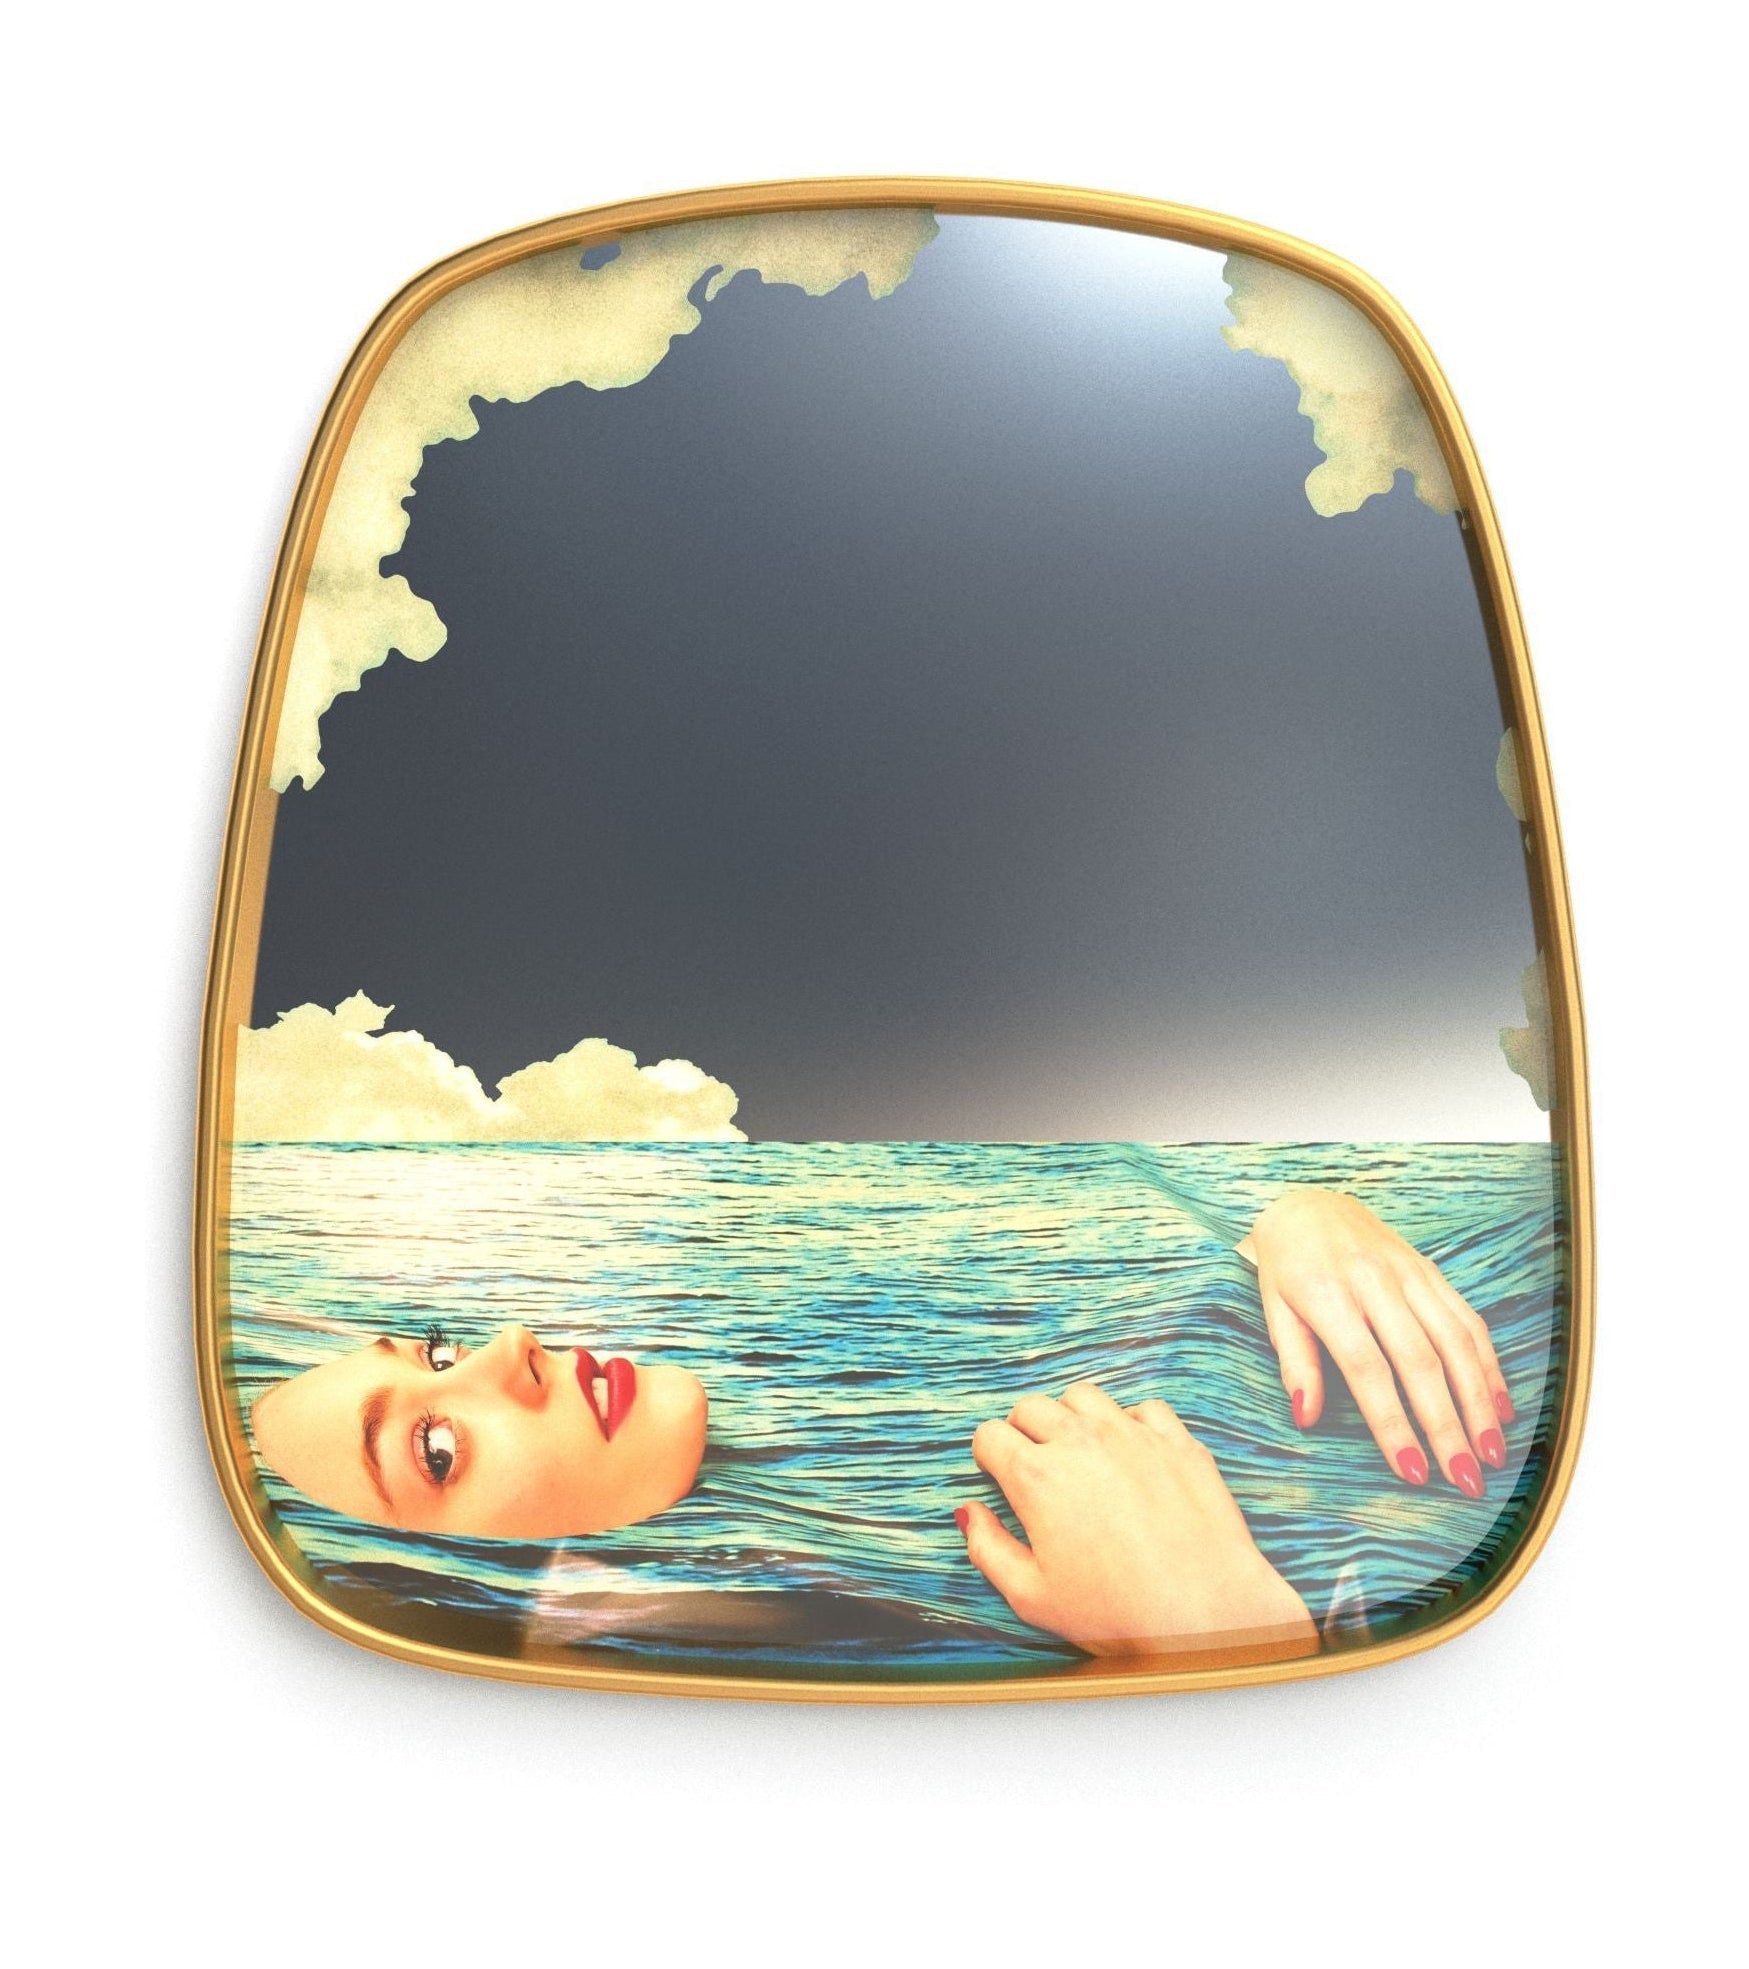 Seletti Toiletpaper Mirror Gold Frame, Seagirl